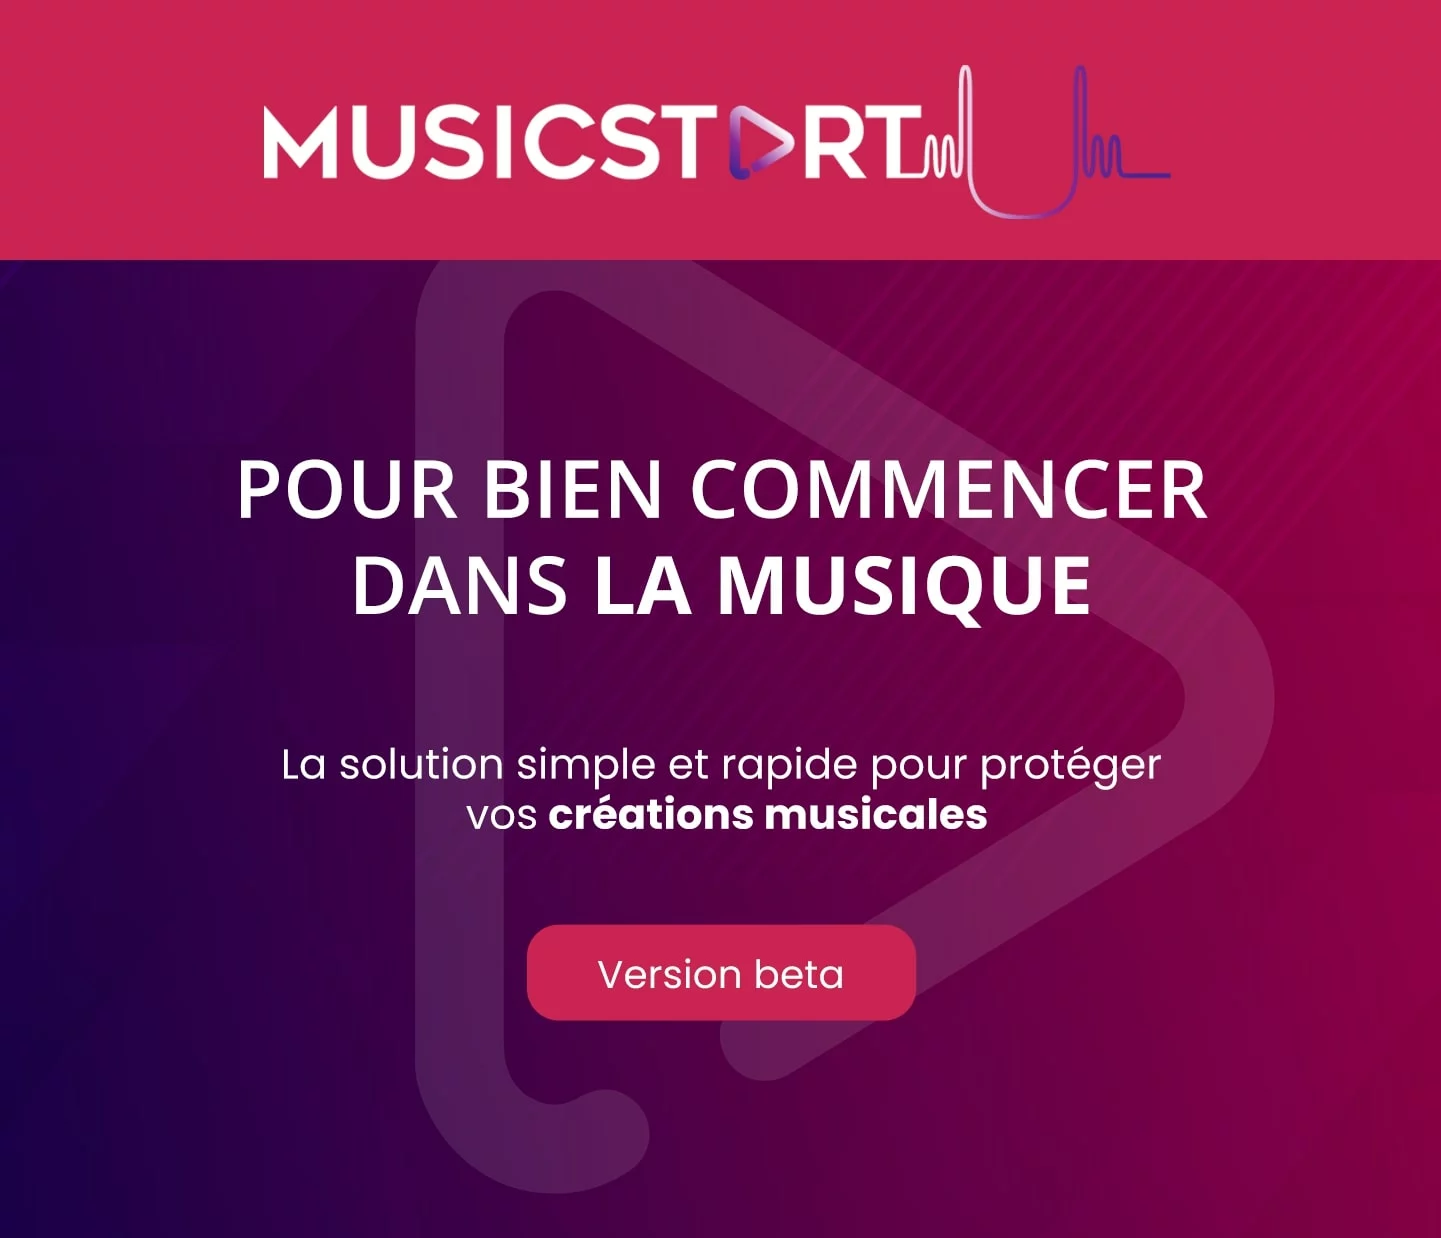 Musicstart: XTEP beta tester for SACEM